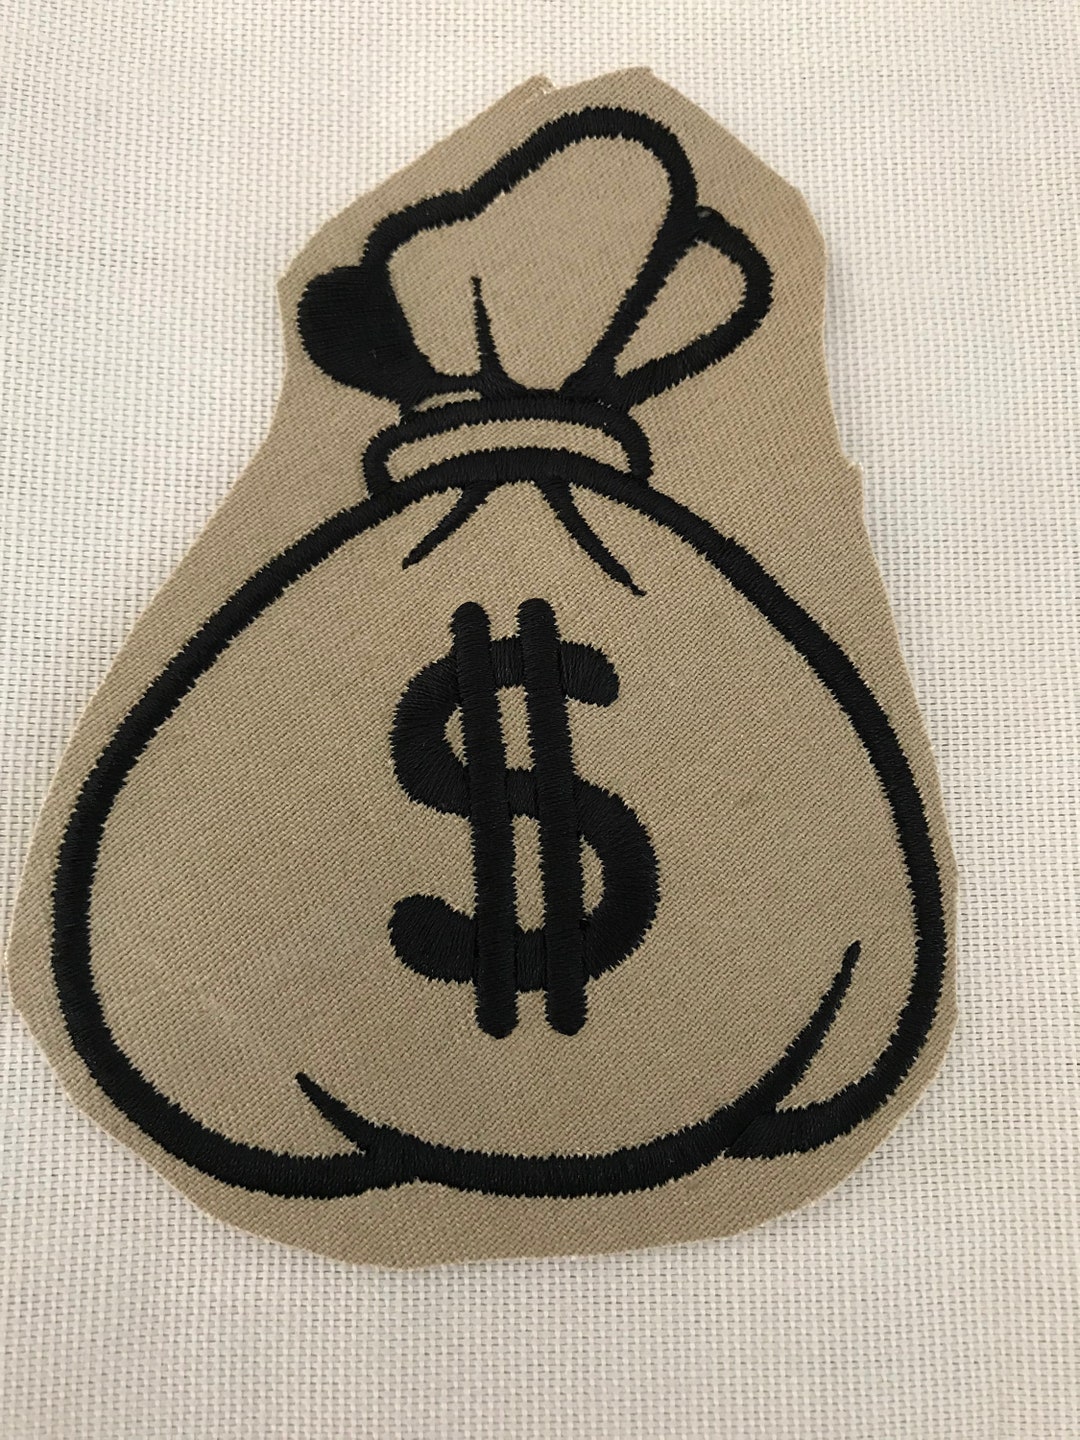 Money Bag Simple Embroidery Design Digital Download - Etsy